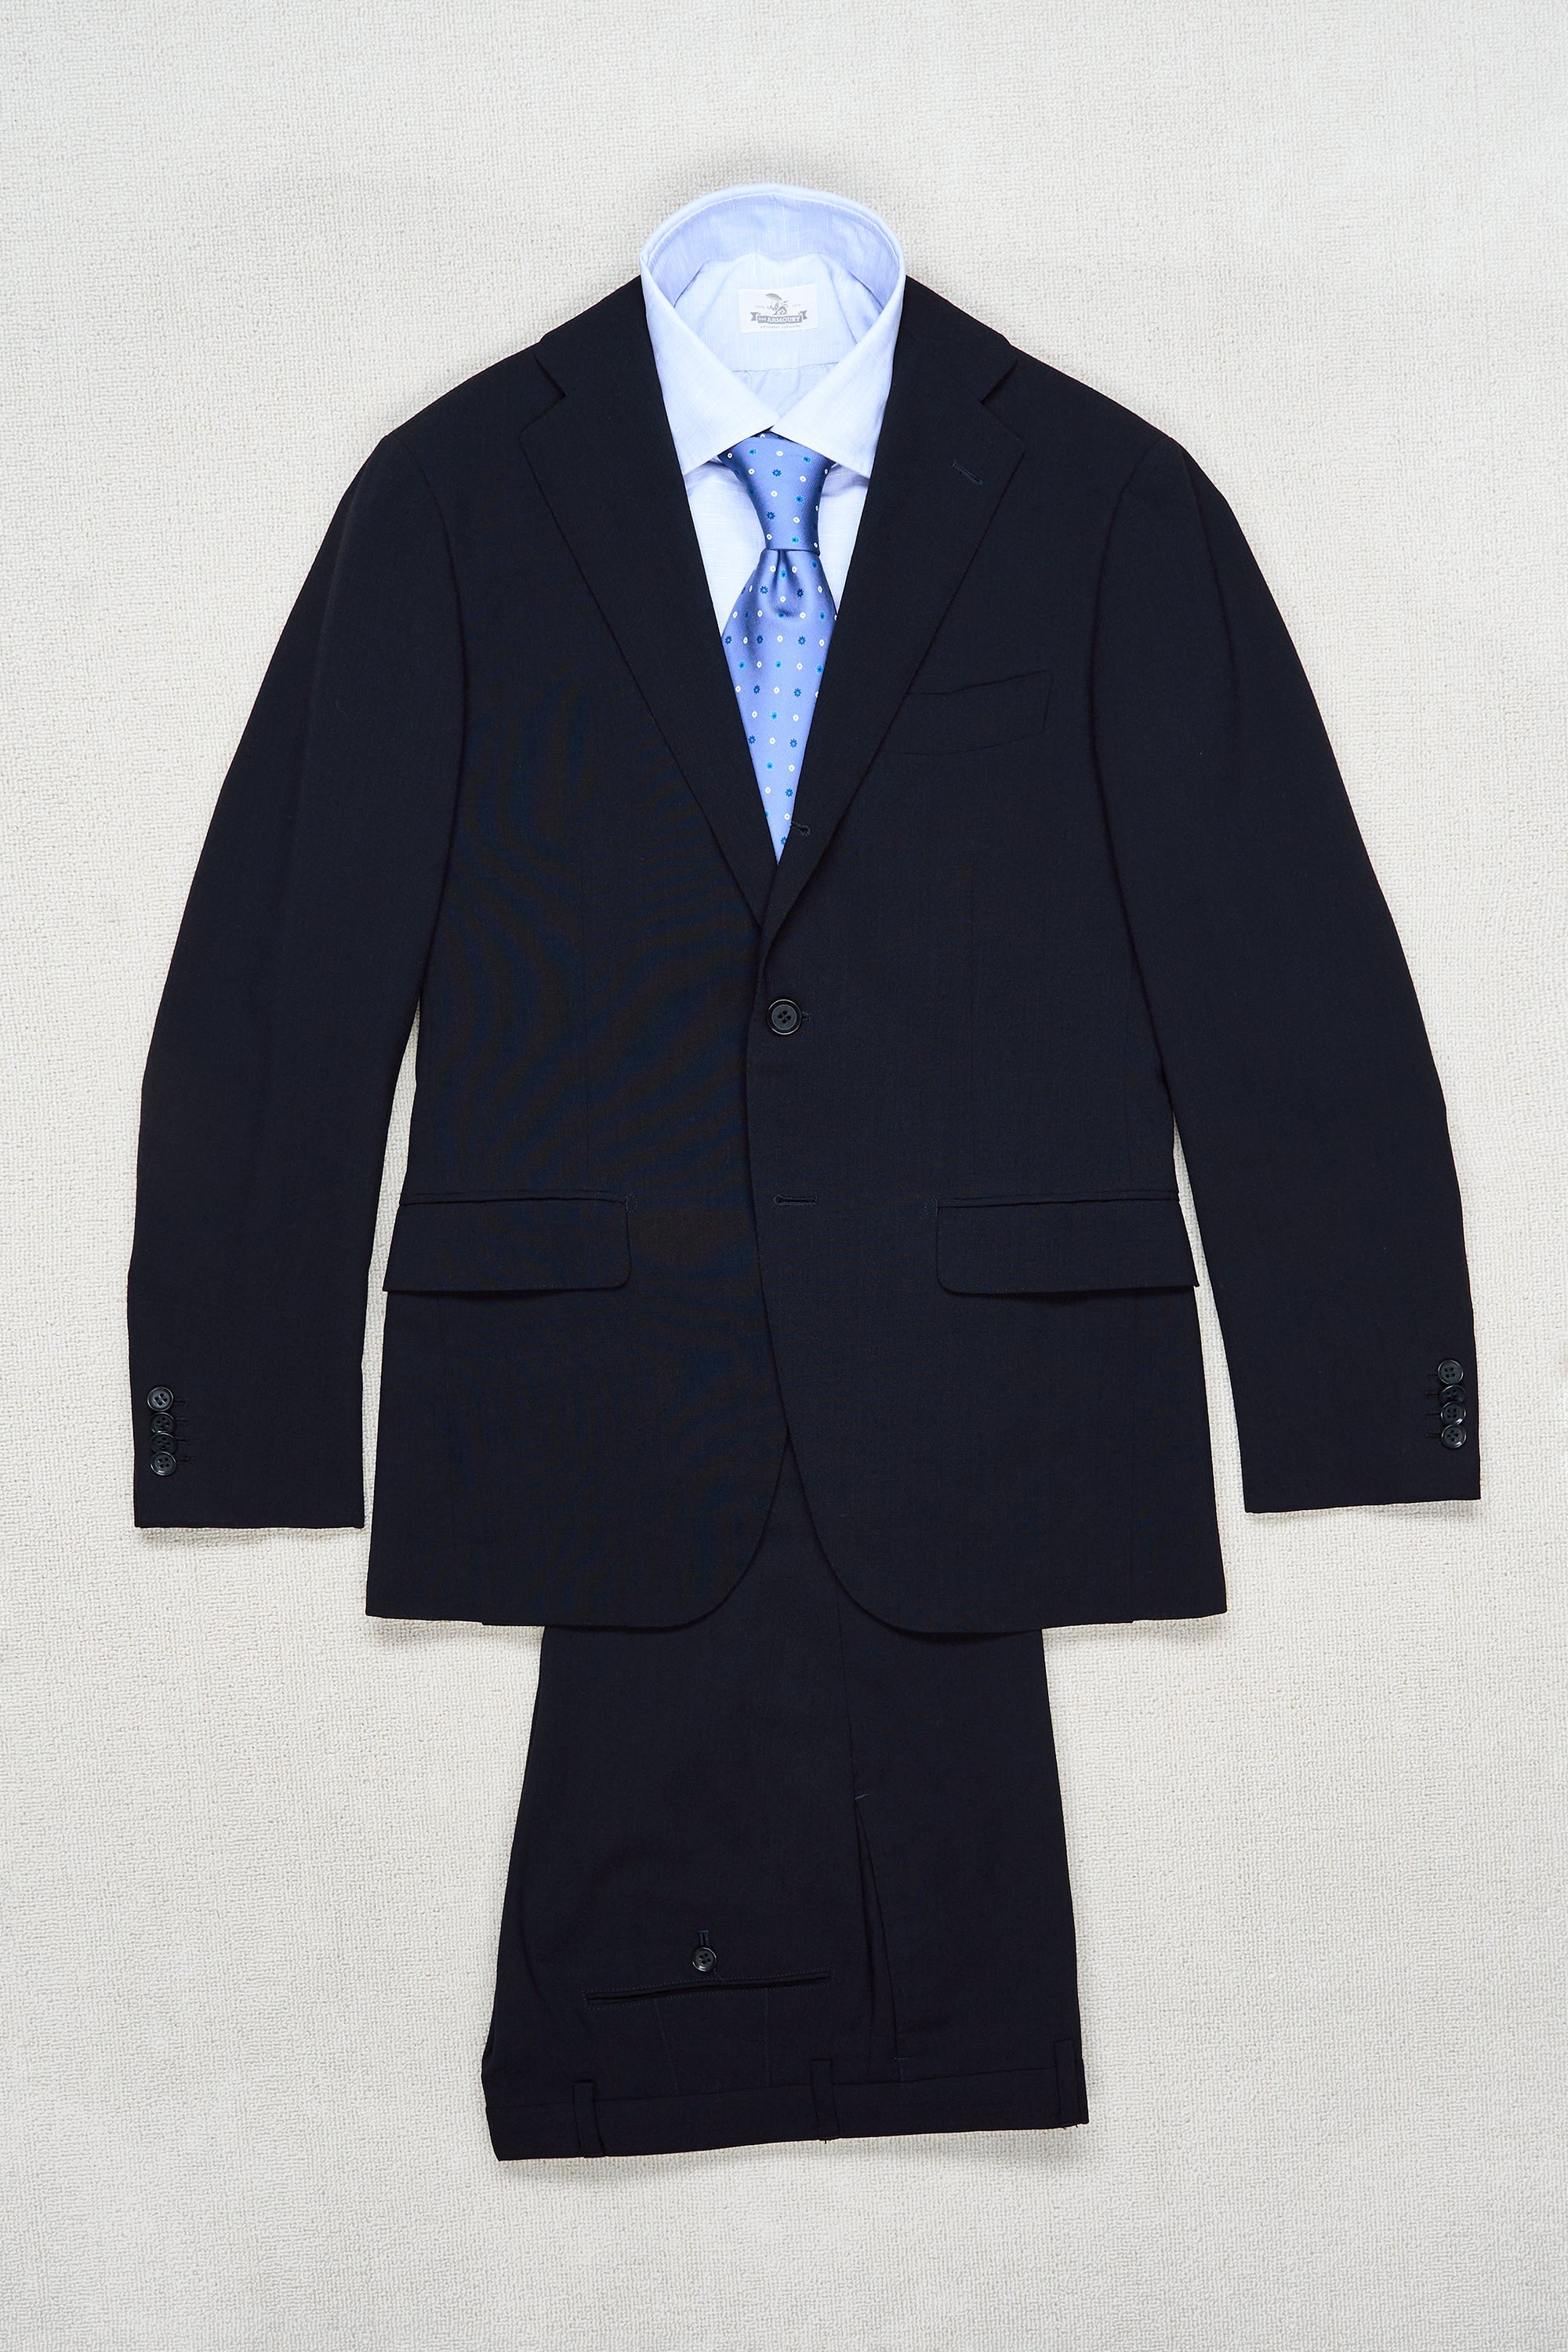 Ring Jacket 184 Navy Wool/Silk "Ice Twist" Suit